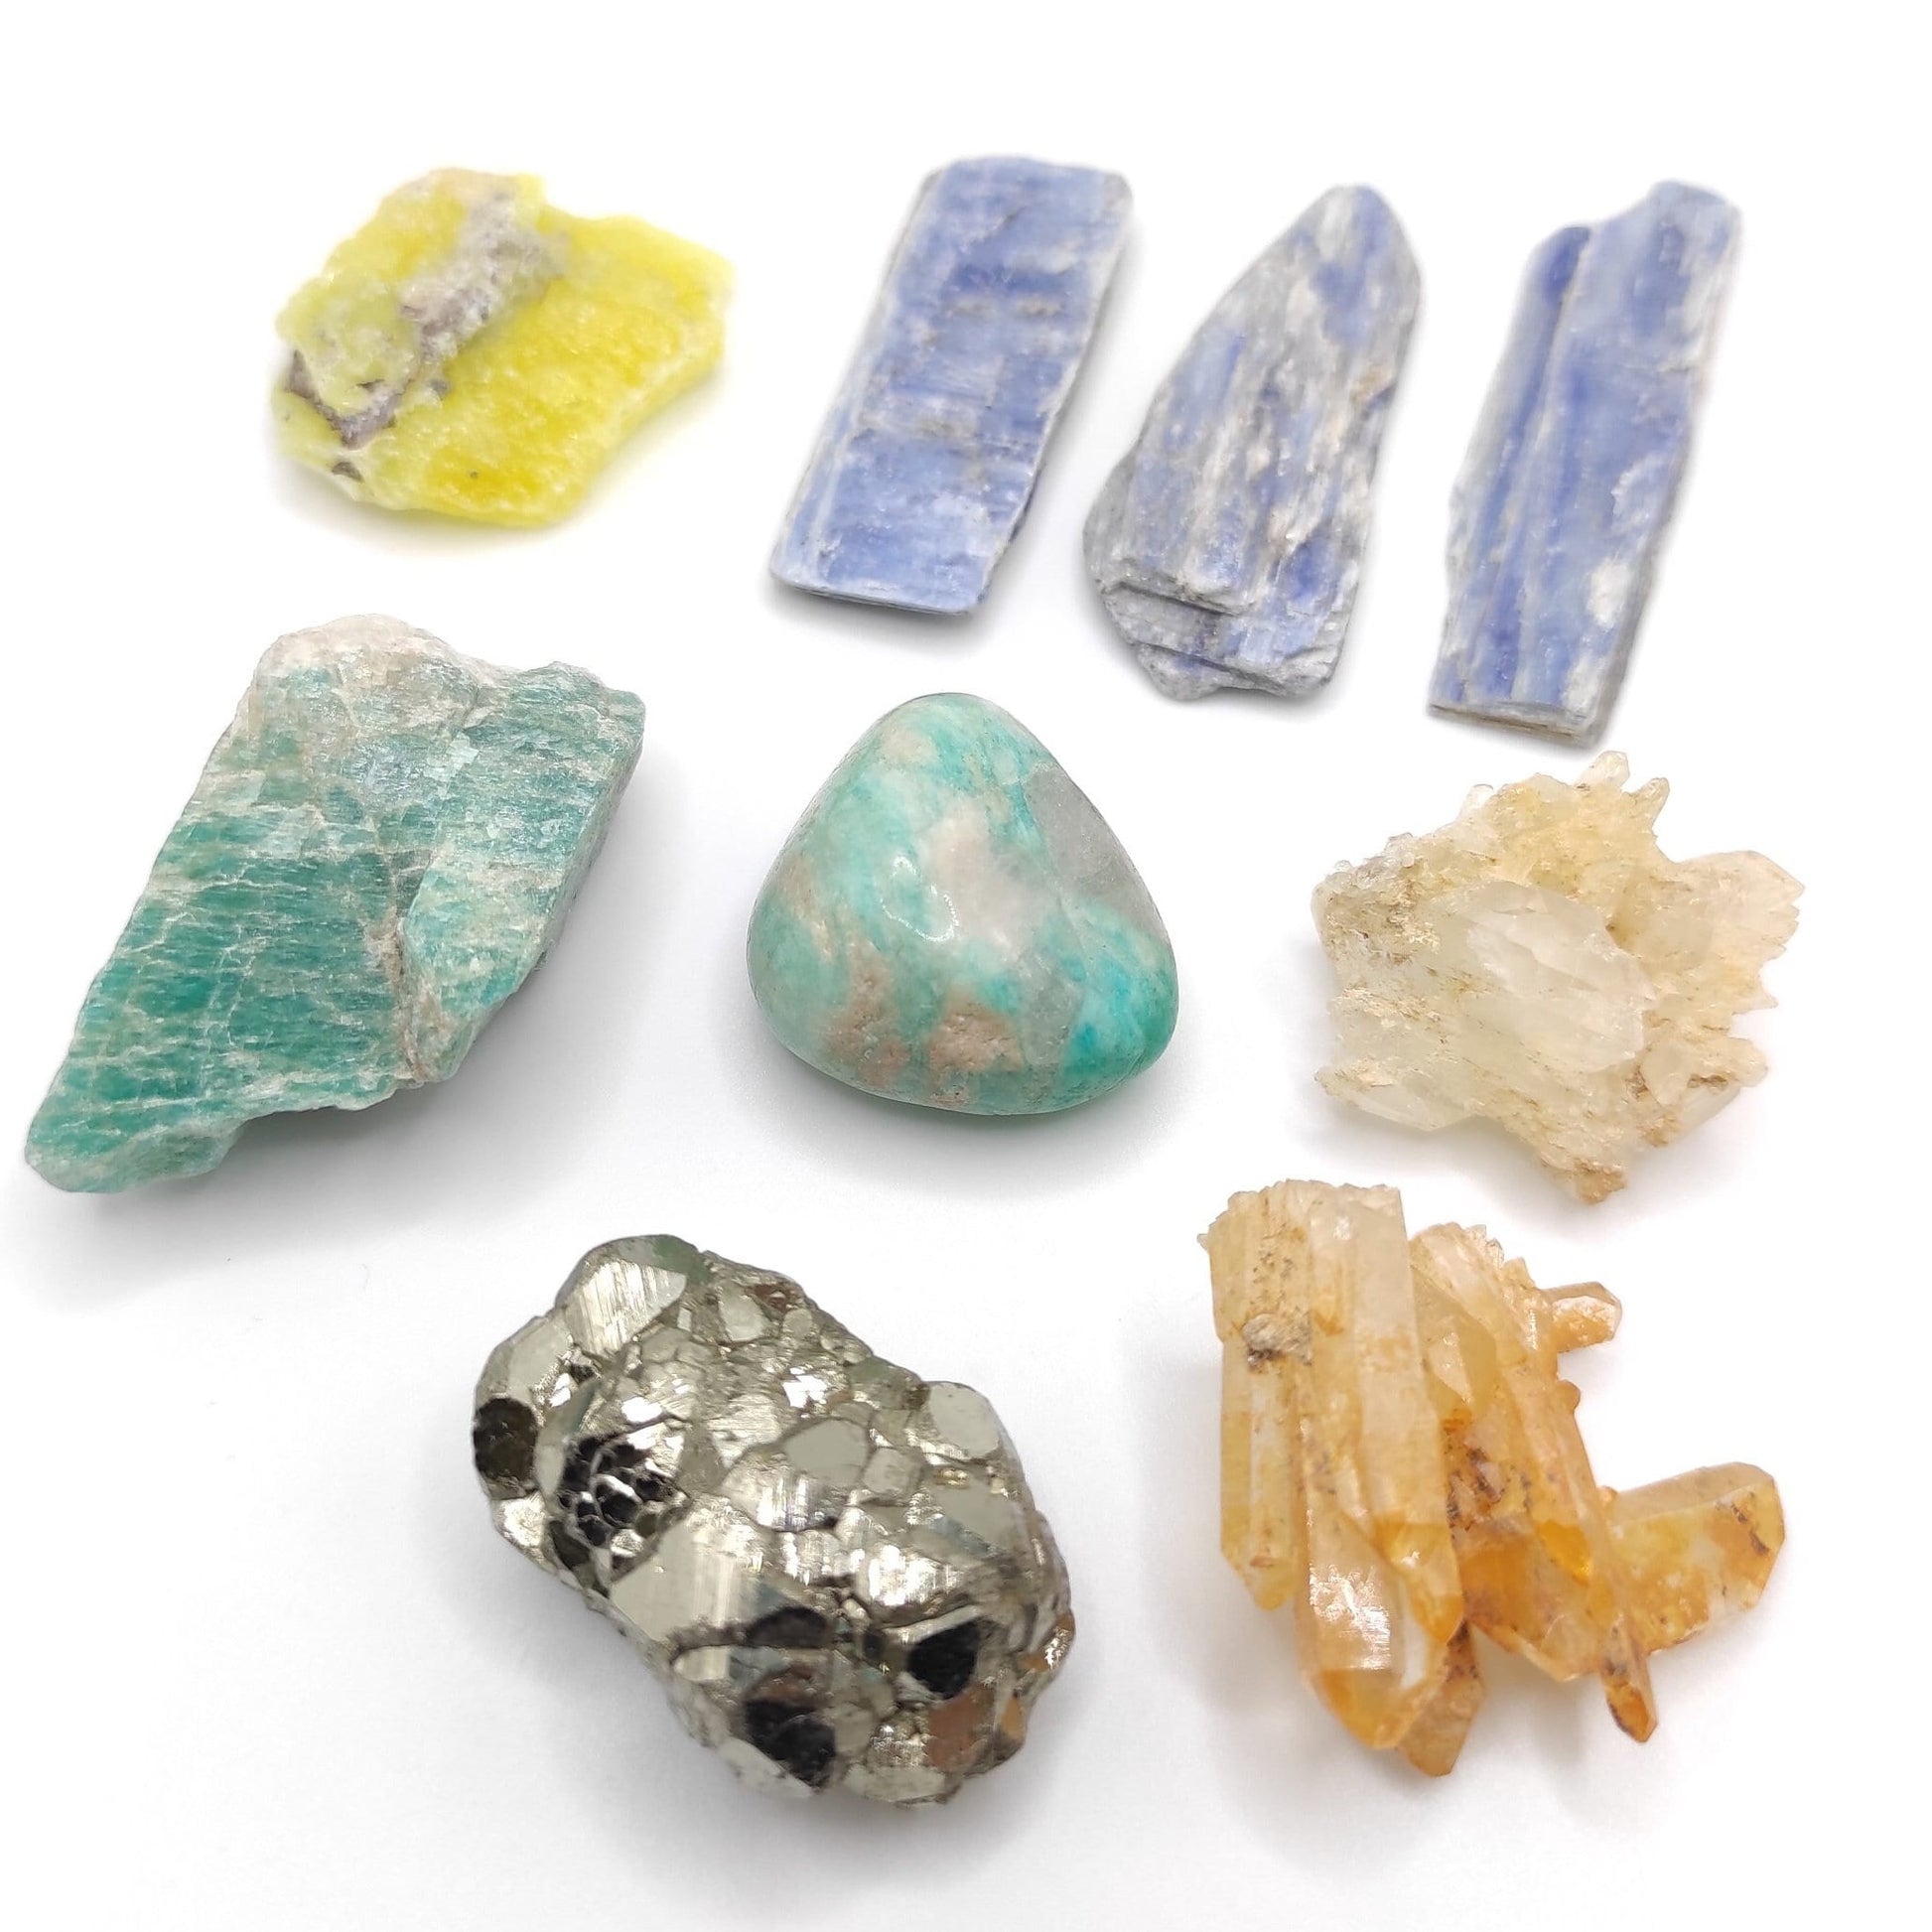 Crystal Starter Kit! Great Christmas Gift Idea - Includes Amazonite, Kyanite, Pyrite, Quartz, Brucite - Natural Crystal Kit - Crystal Set